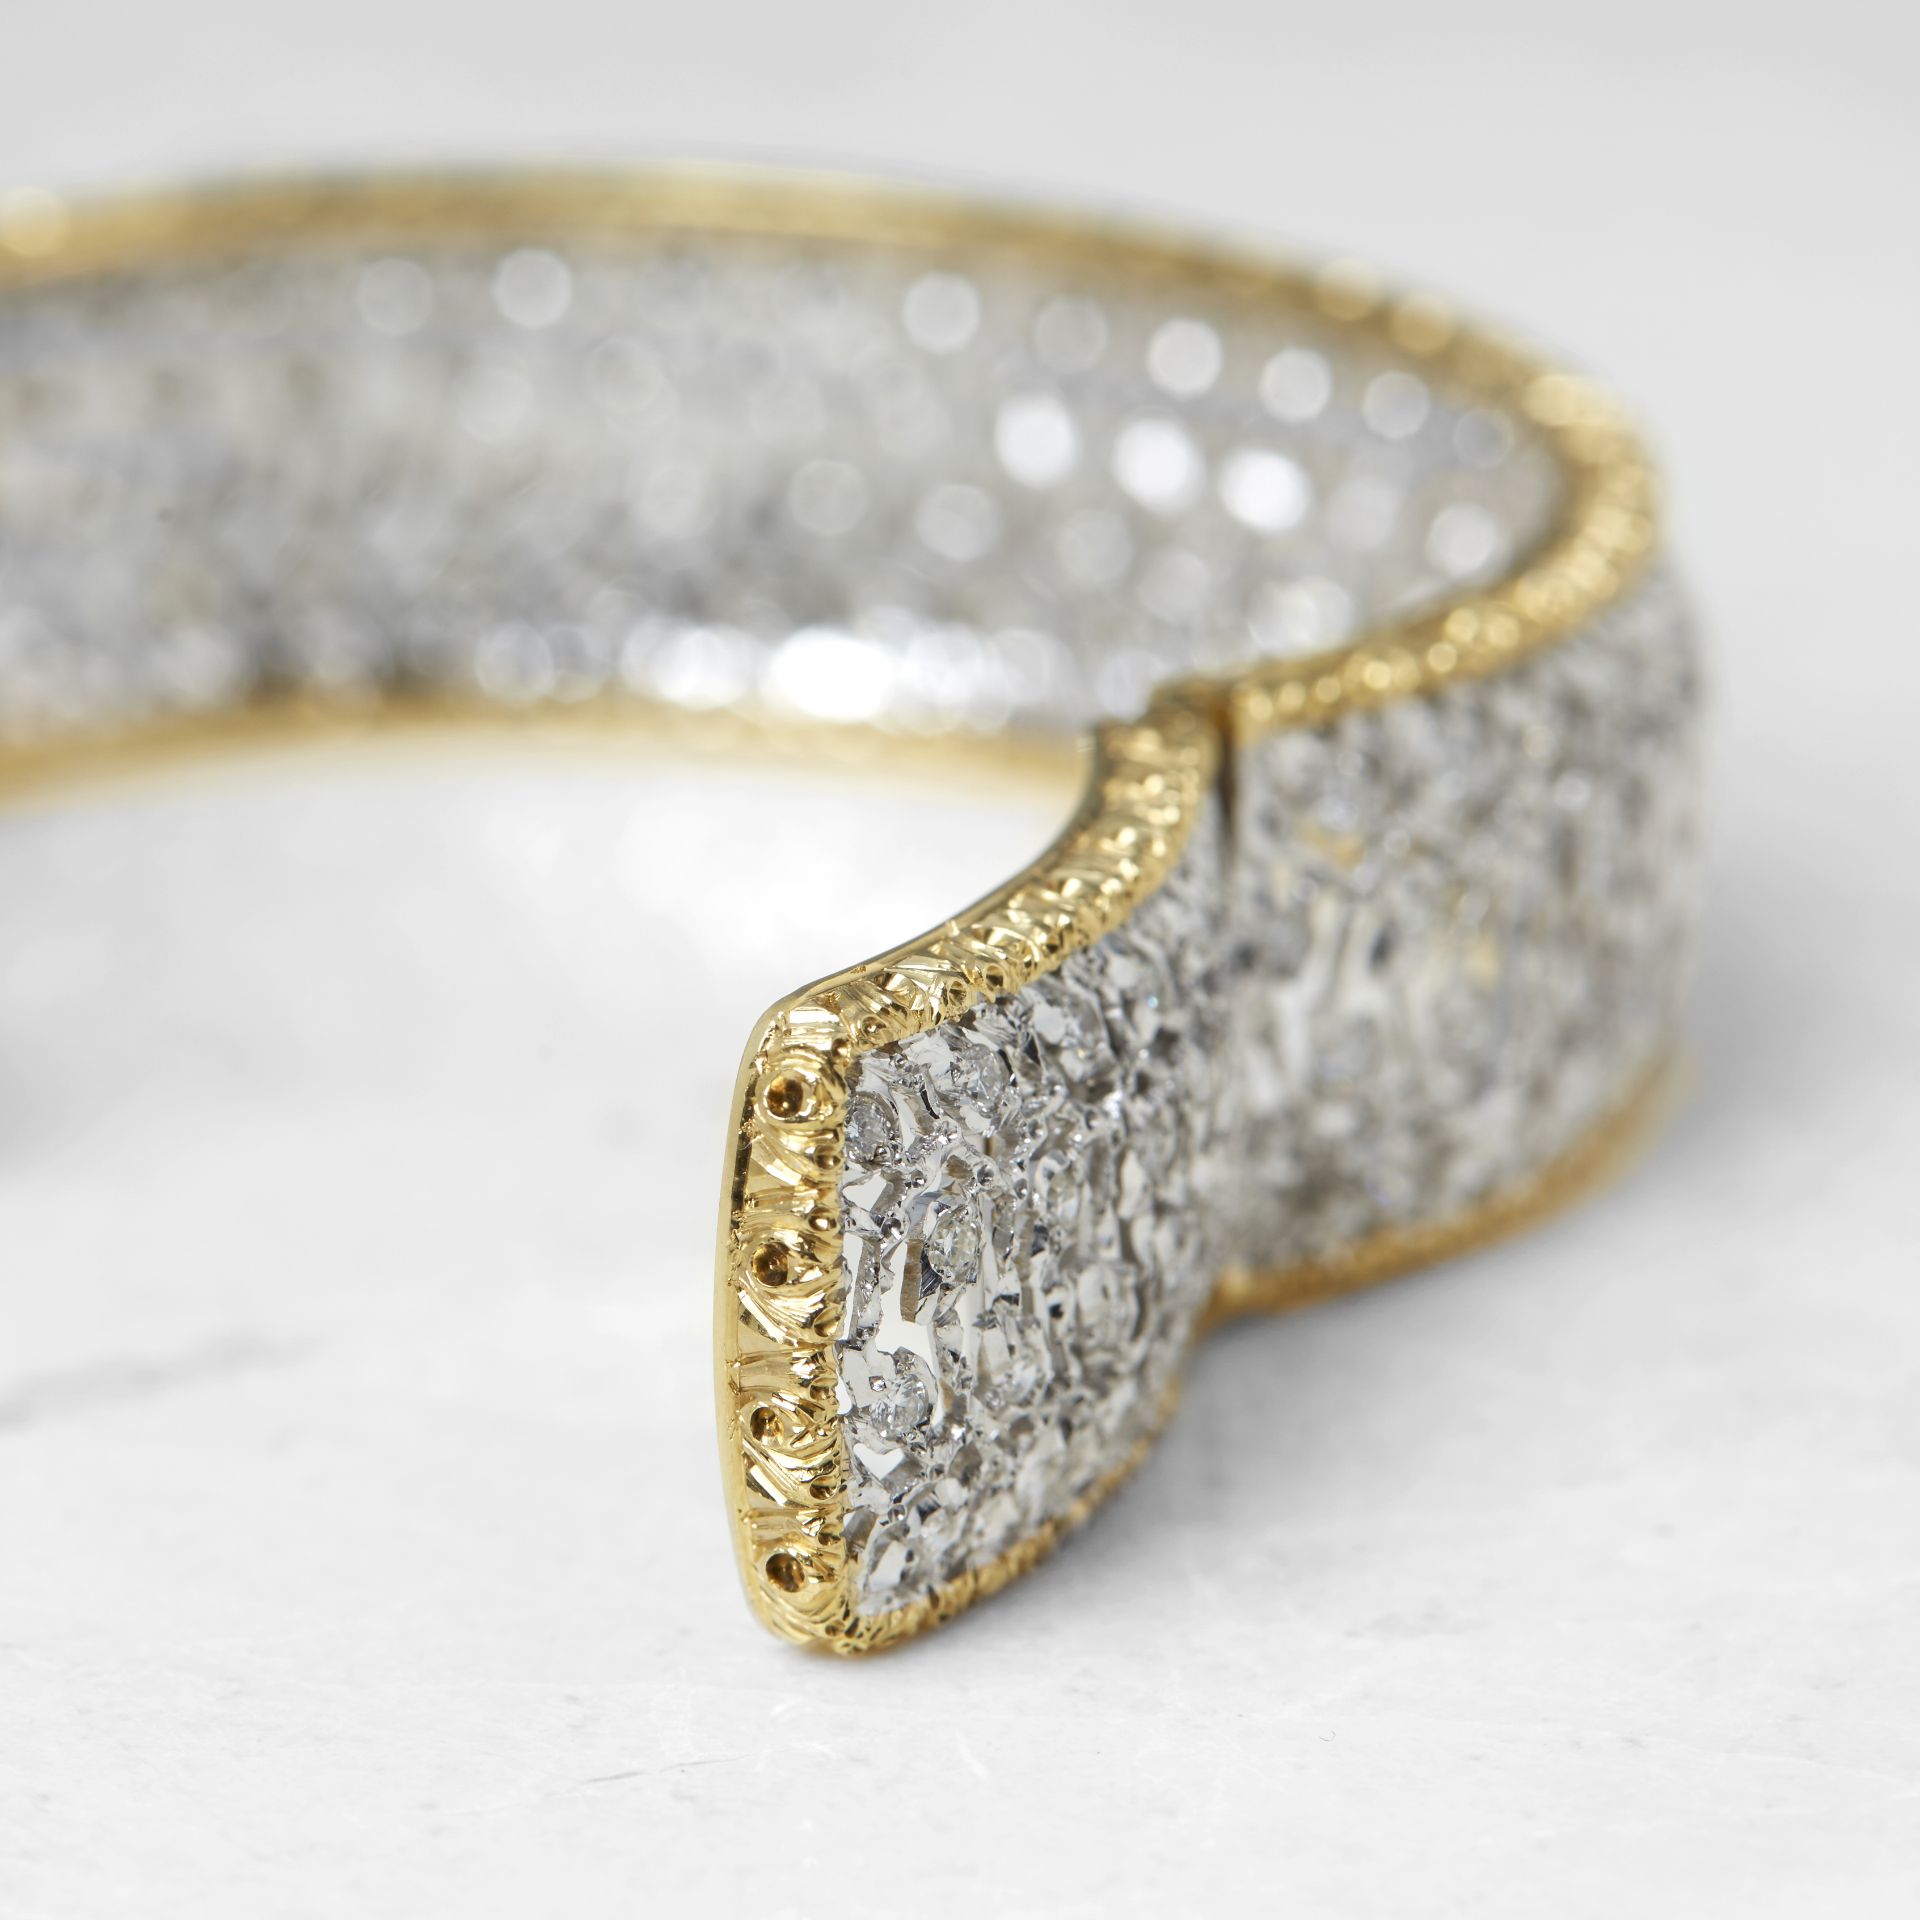 Buccellati 18k White & Yellow Gold 5.00ct Diamond Cuff Bracelet with Presentation Box - Image 5 of 8